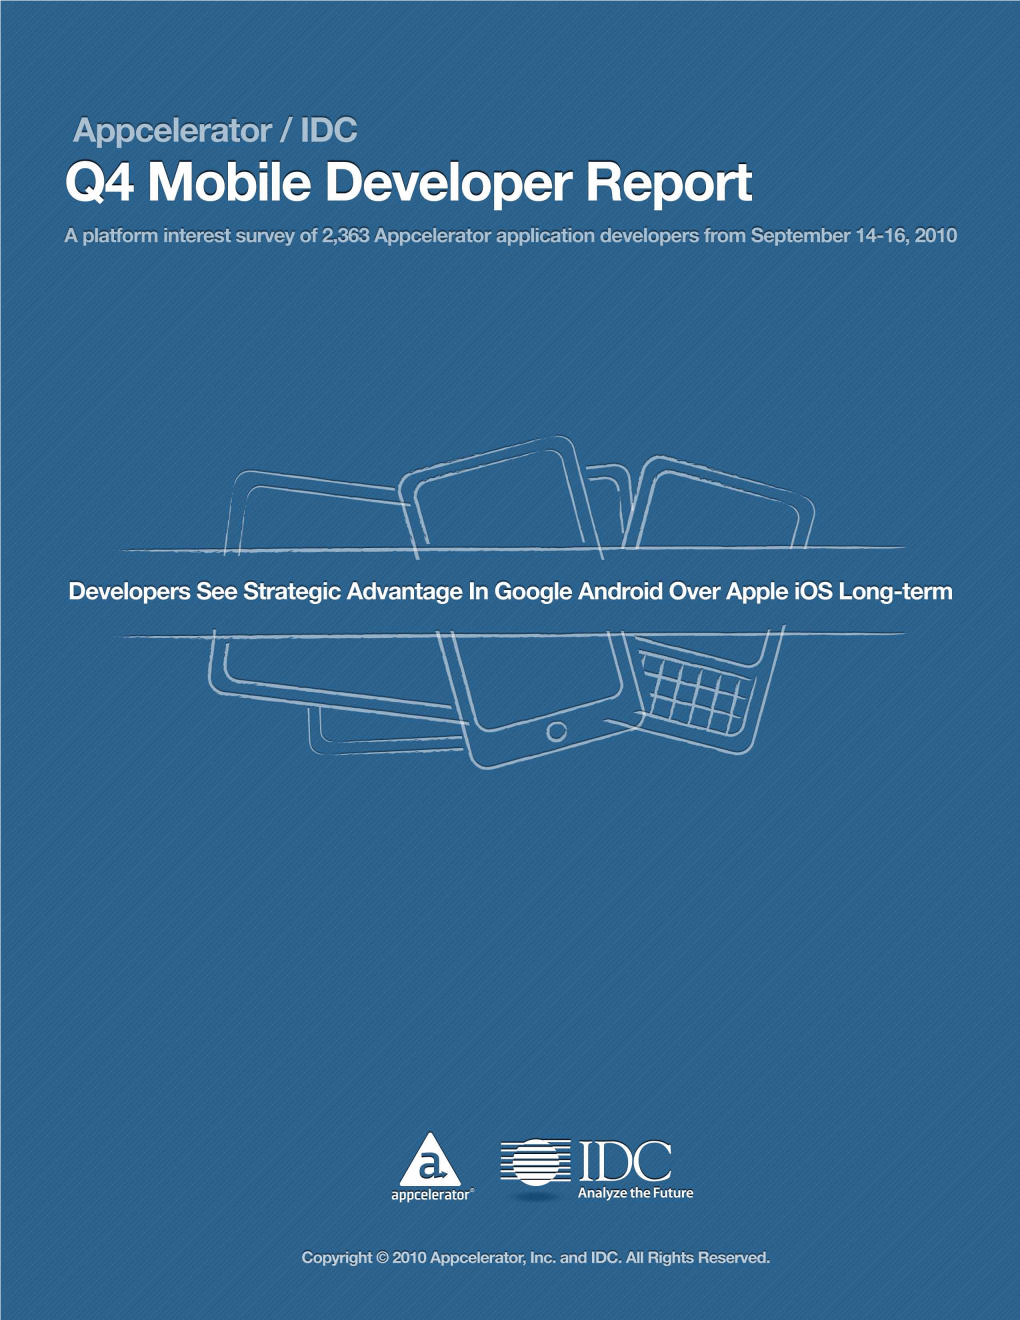 Appcelerator / IDC Q4 Mobile Developer Report Summary